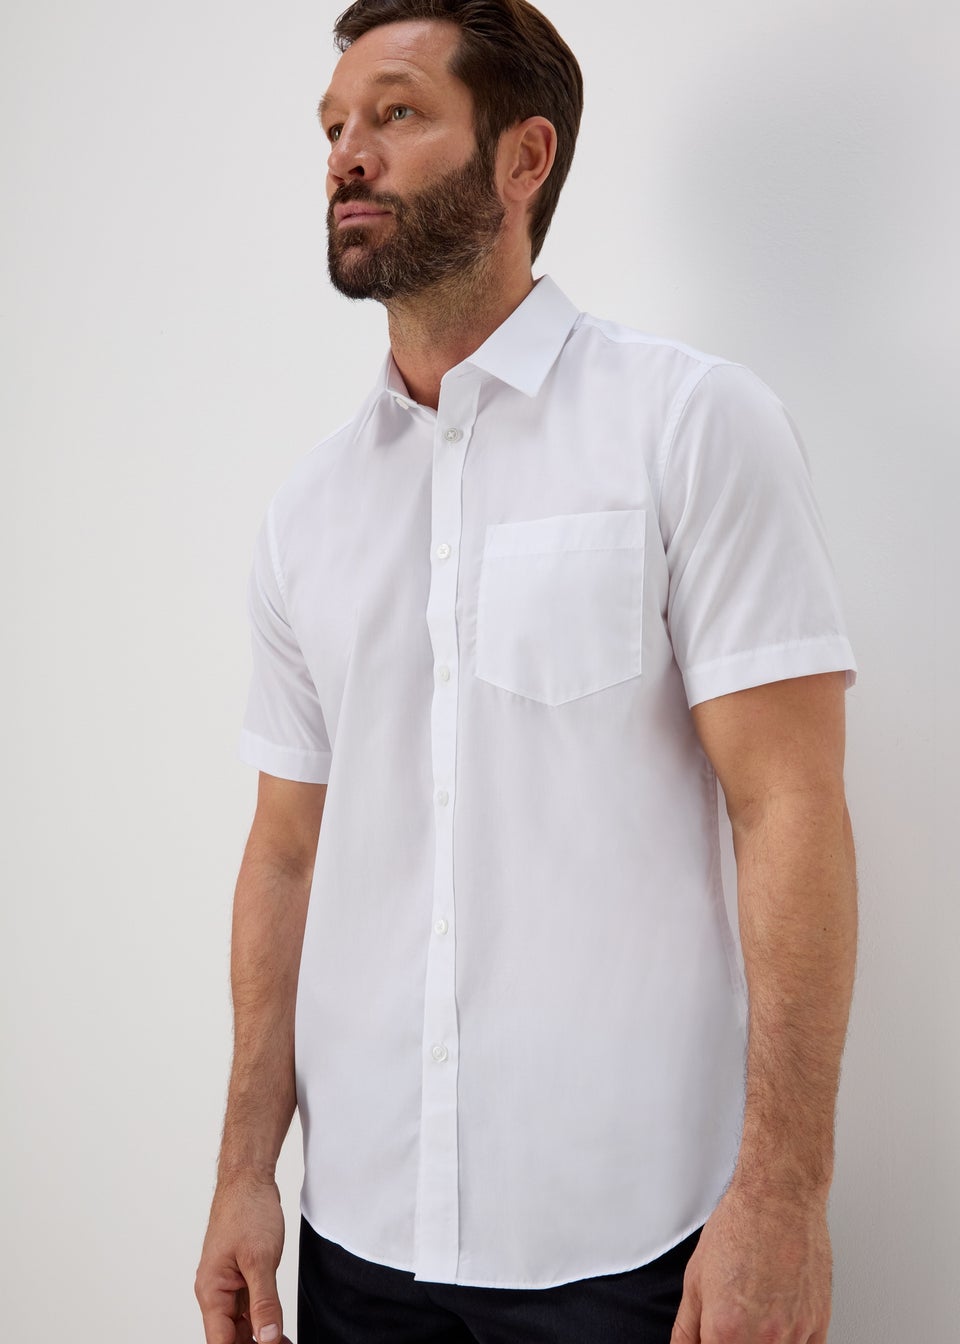 Taylor & Wright White Easy Care Regular Fit Short Sleeve Shirt - Matalan